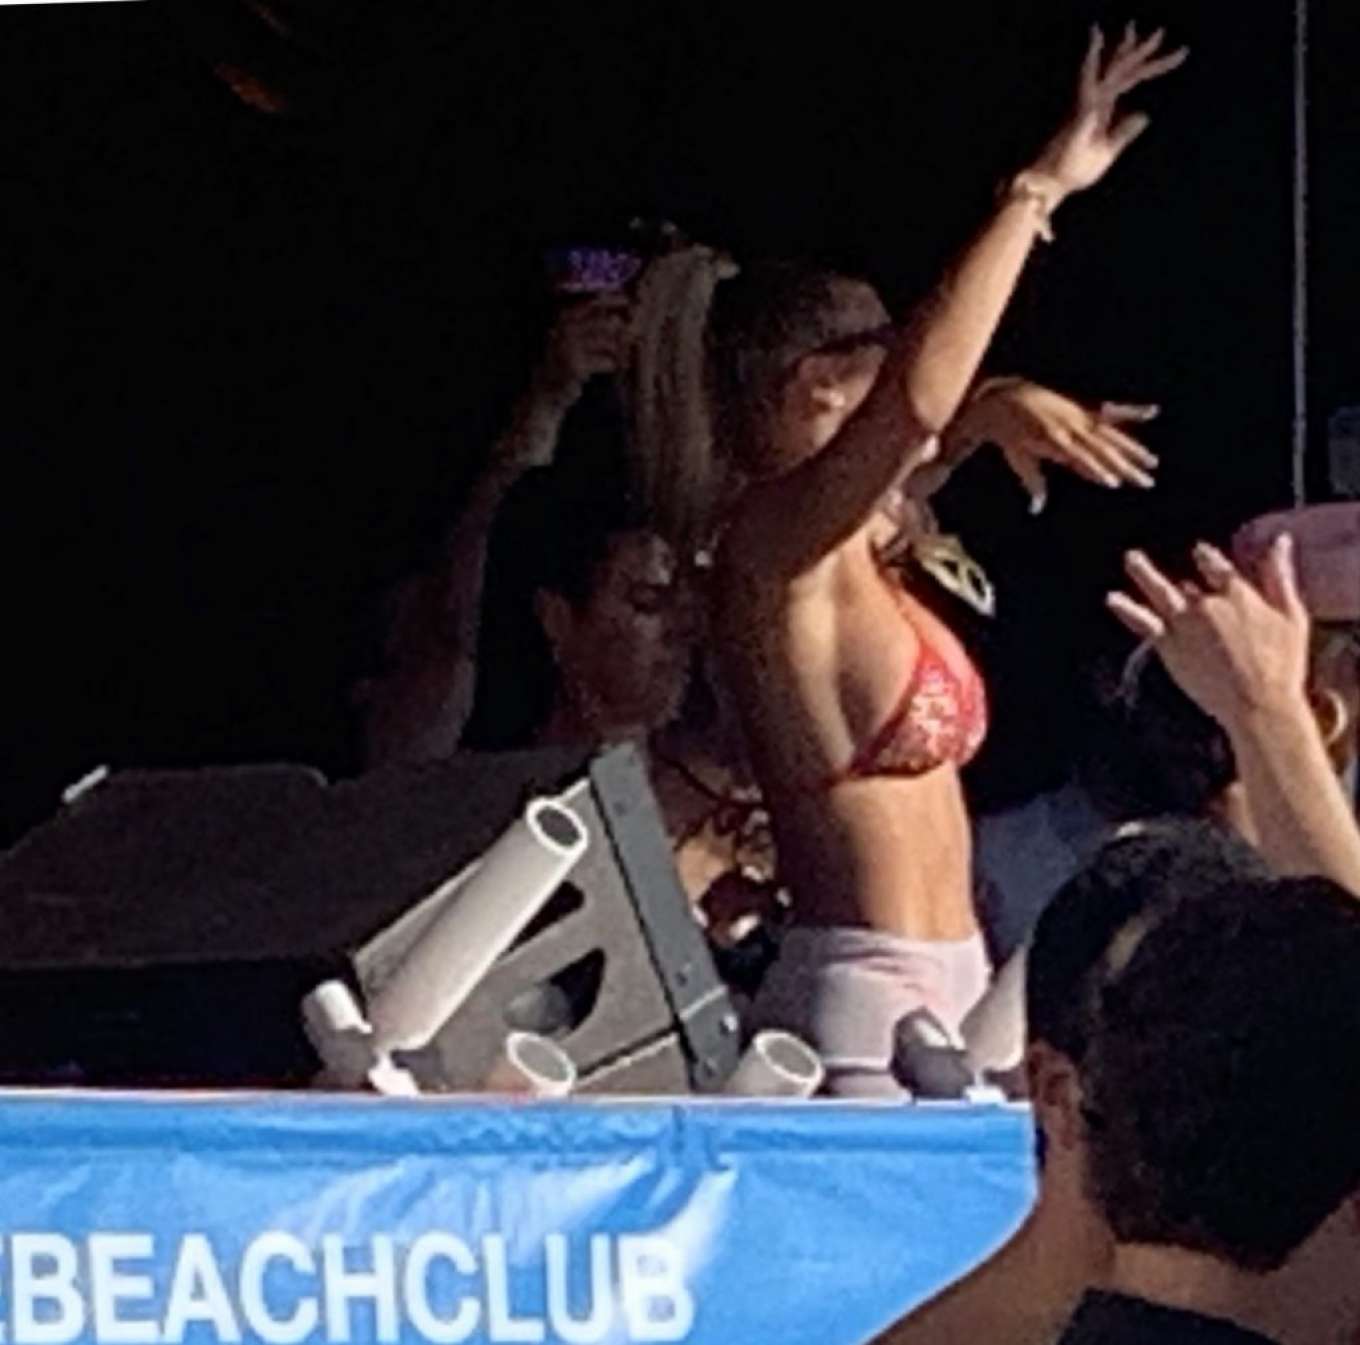 Sofia Richie parties in the encore Beach club close to DJ Alesso in Las Vegas